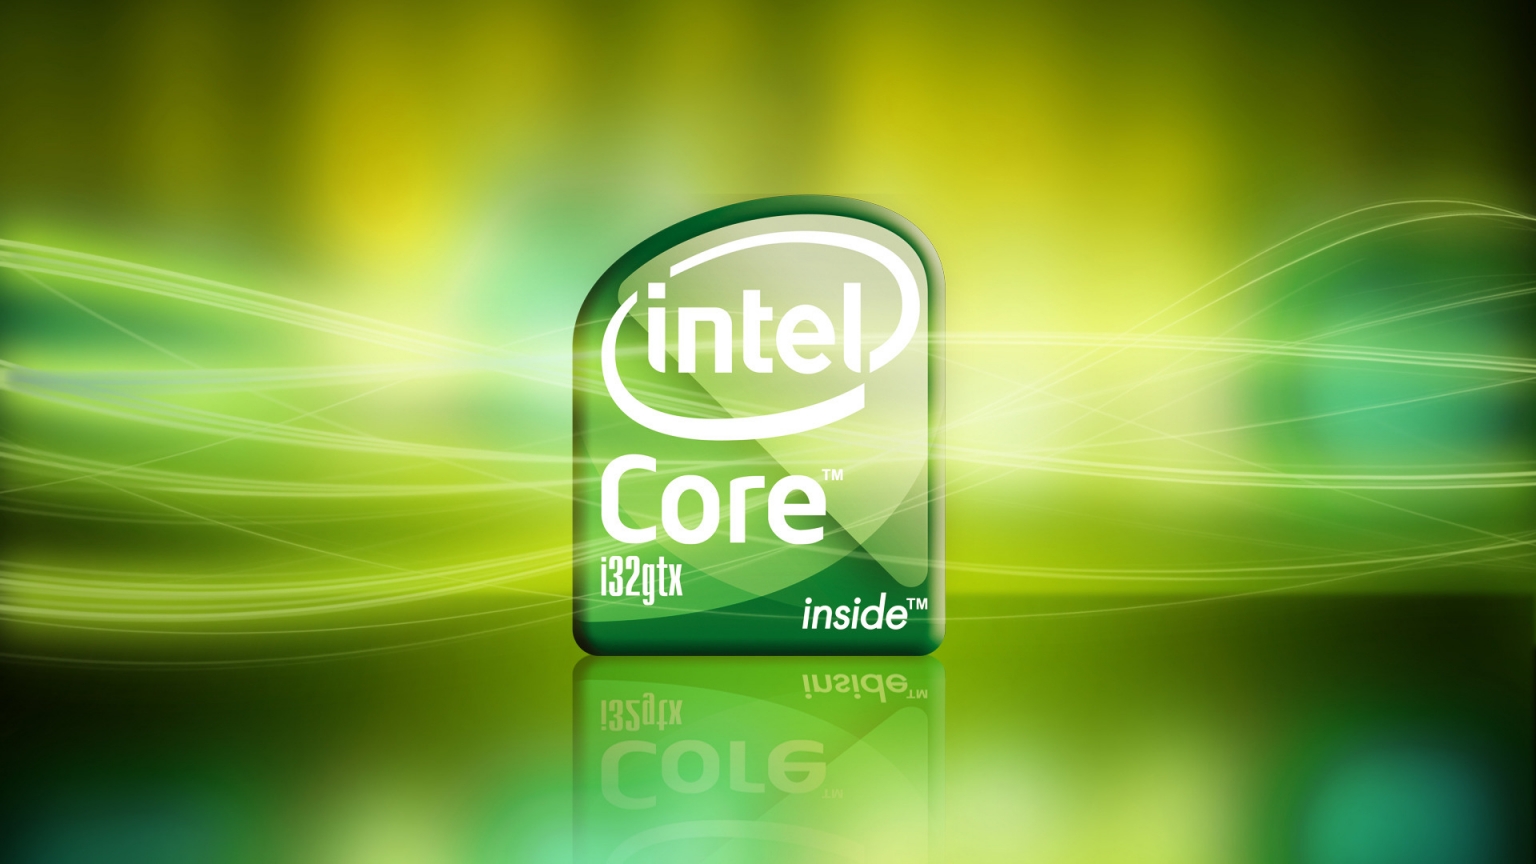 Intel Core i32gtx for 1536 x 864 HDTV resolution